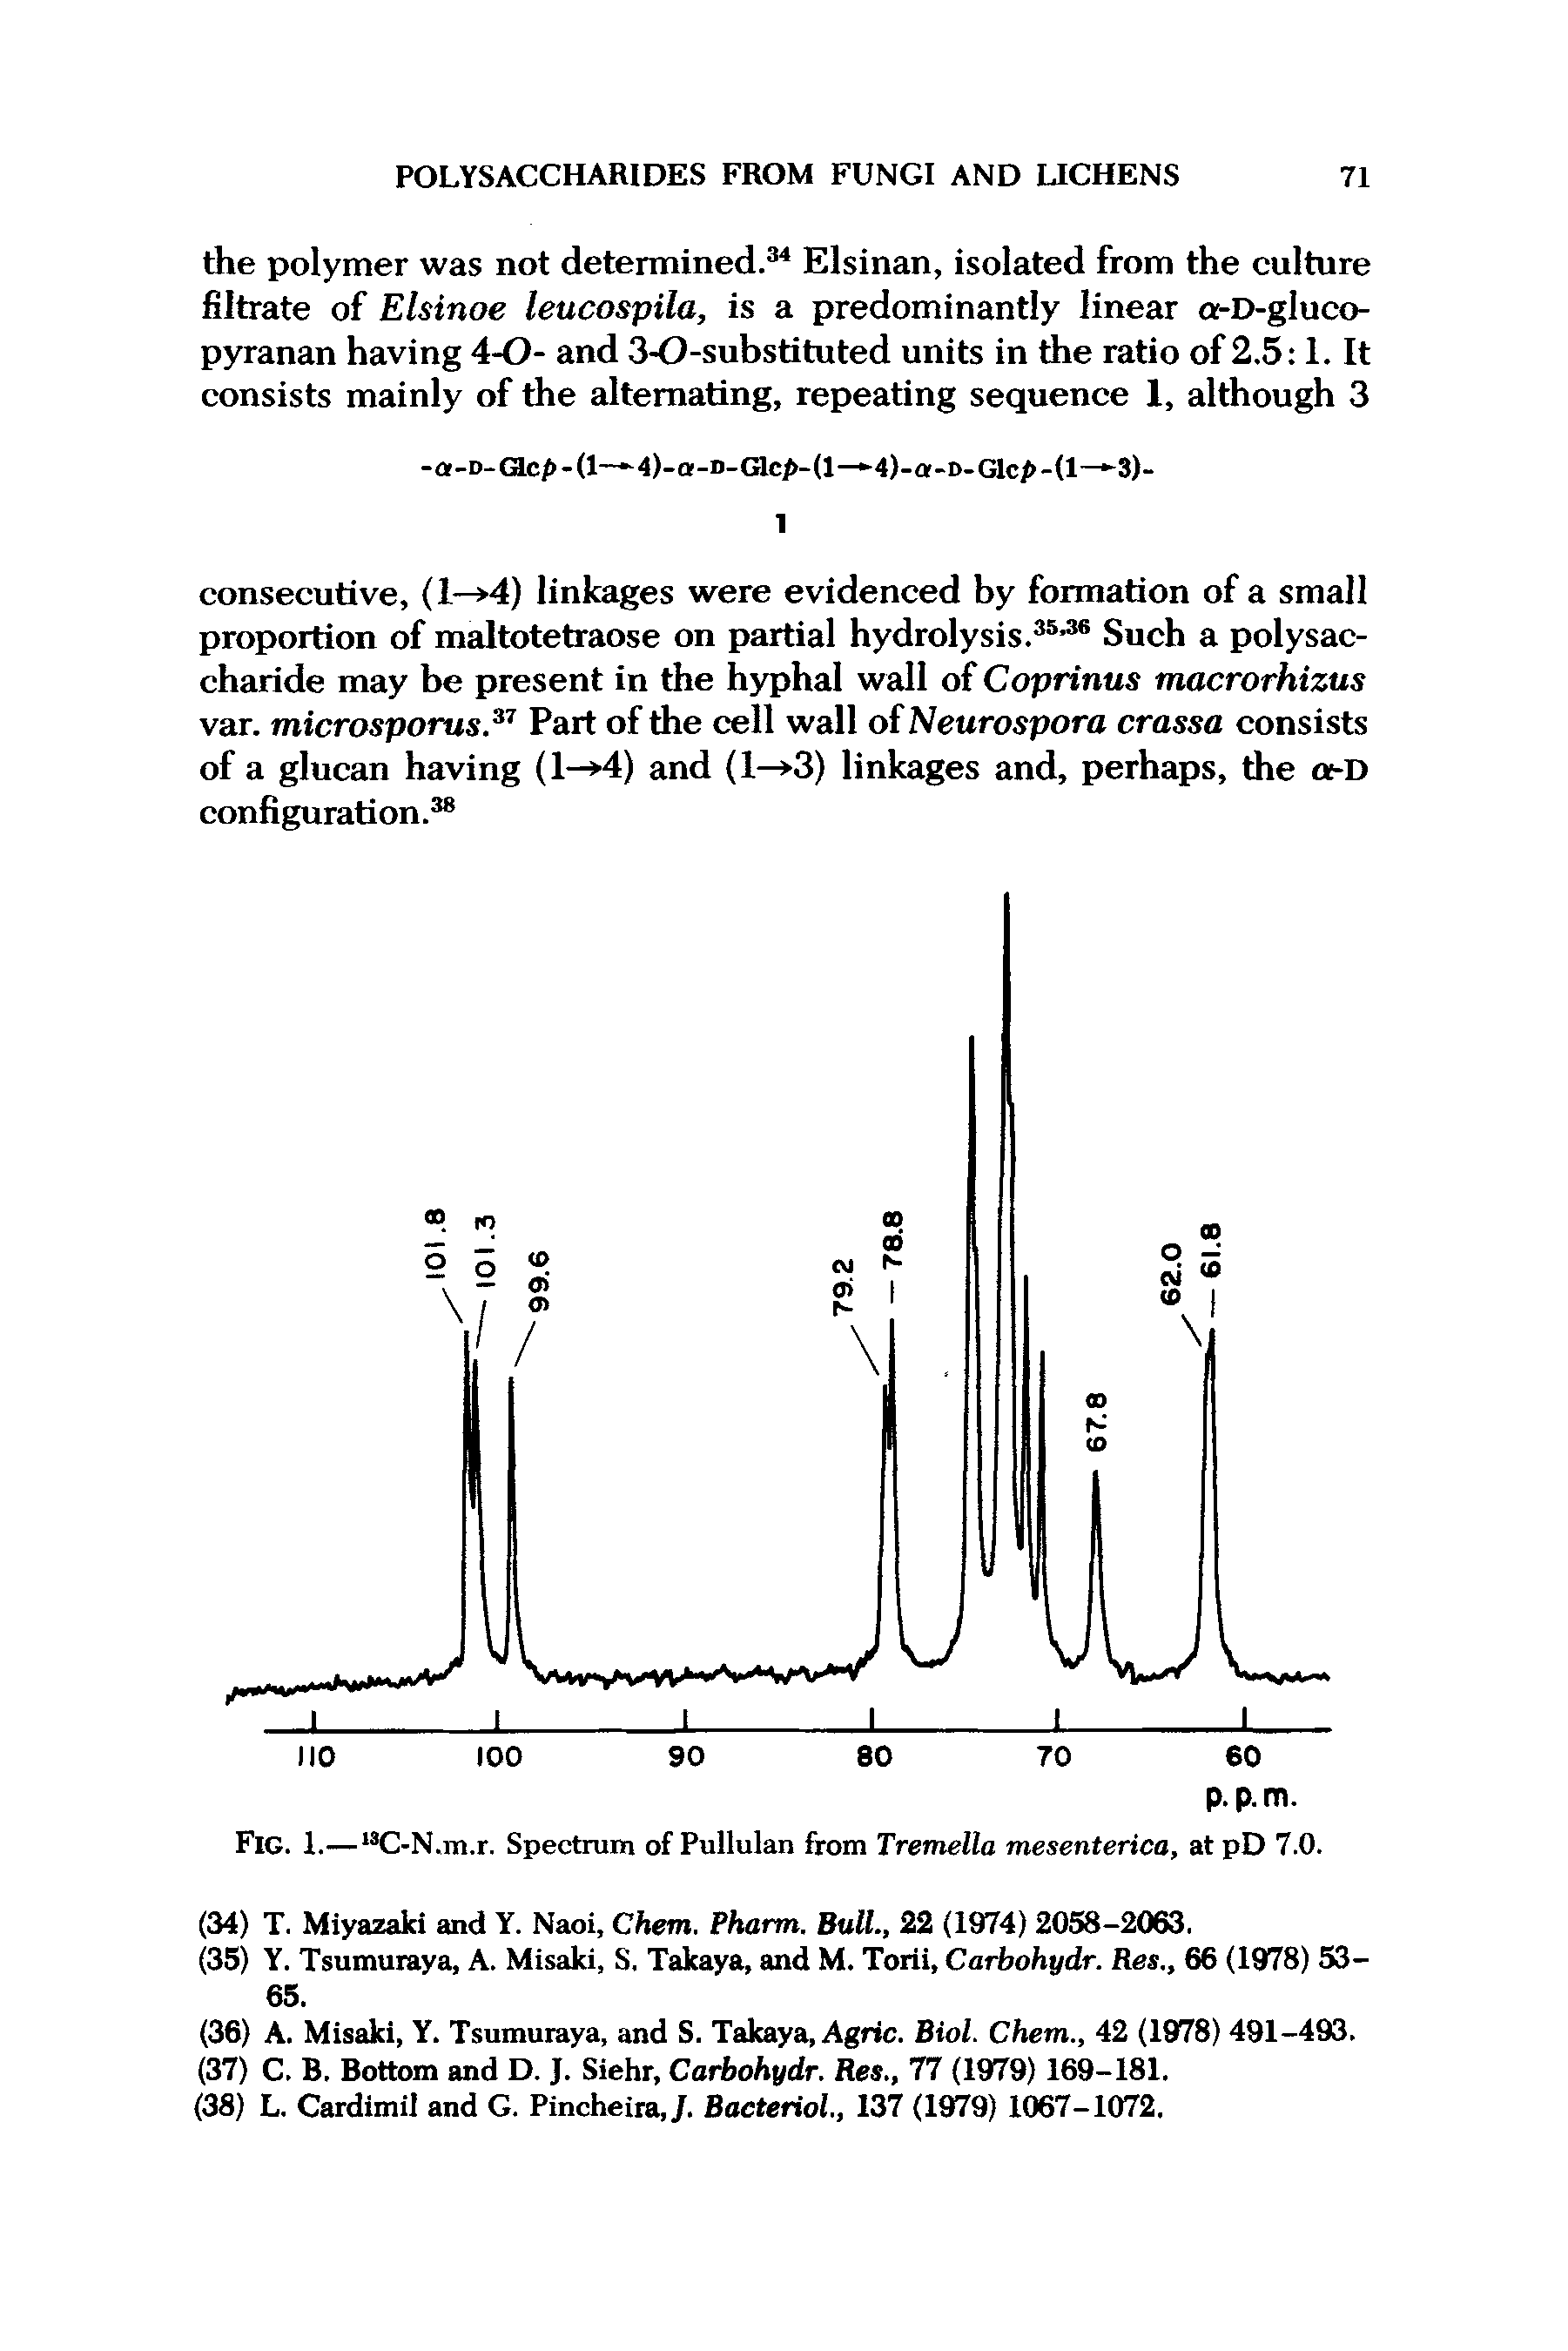 Fig. 1.—13C-N.m.r. Spectrum of Pullulan from Tremella mesenterica, atpD 7.0.